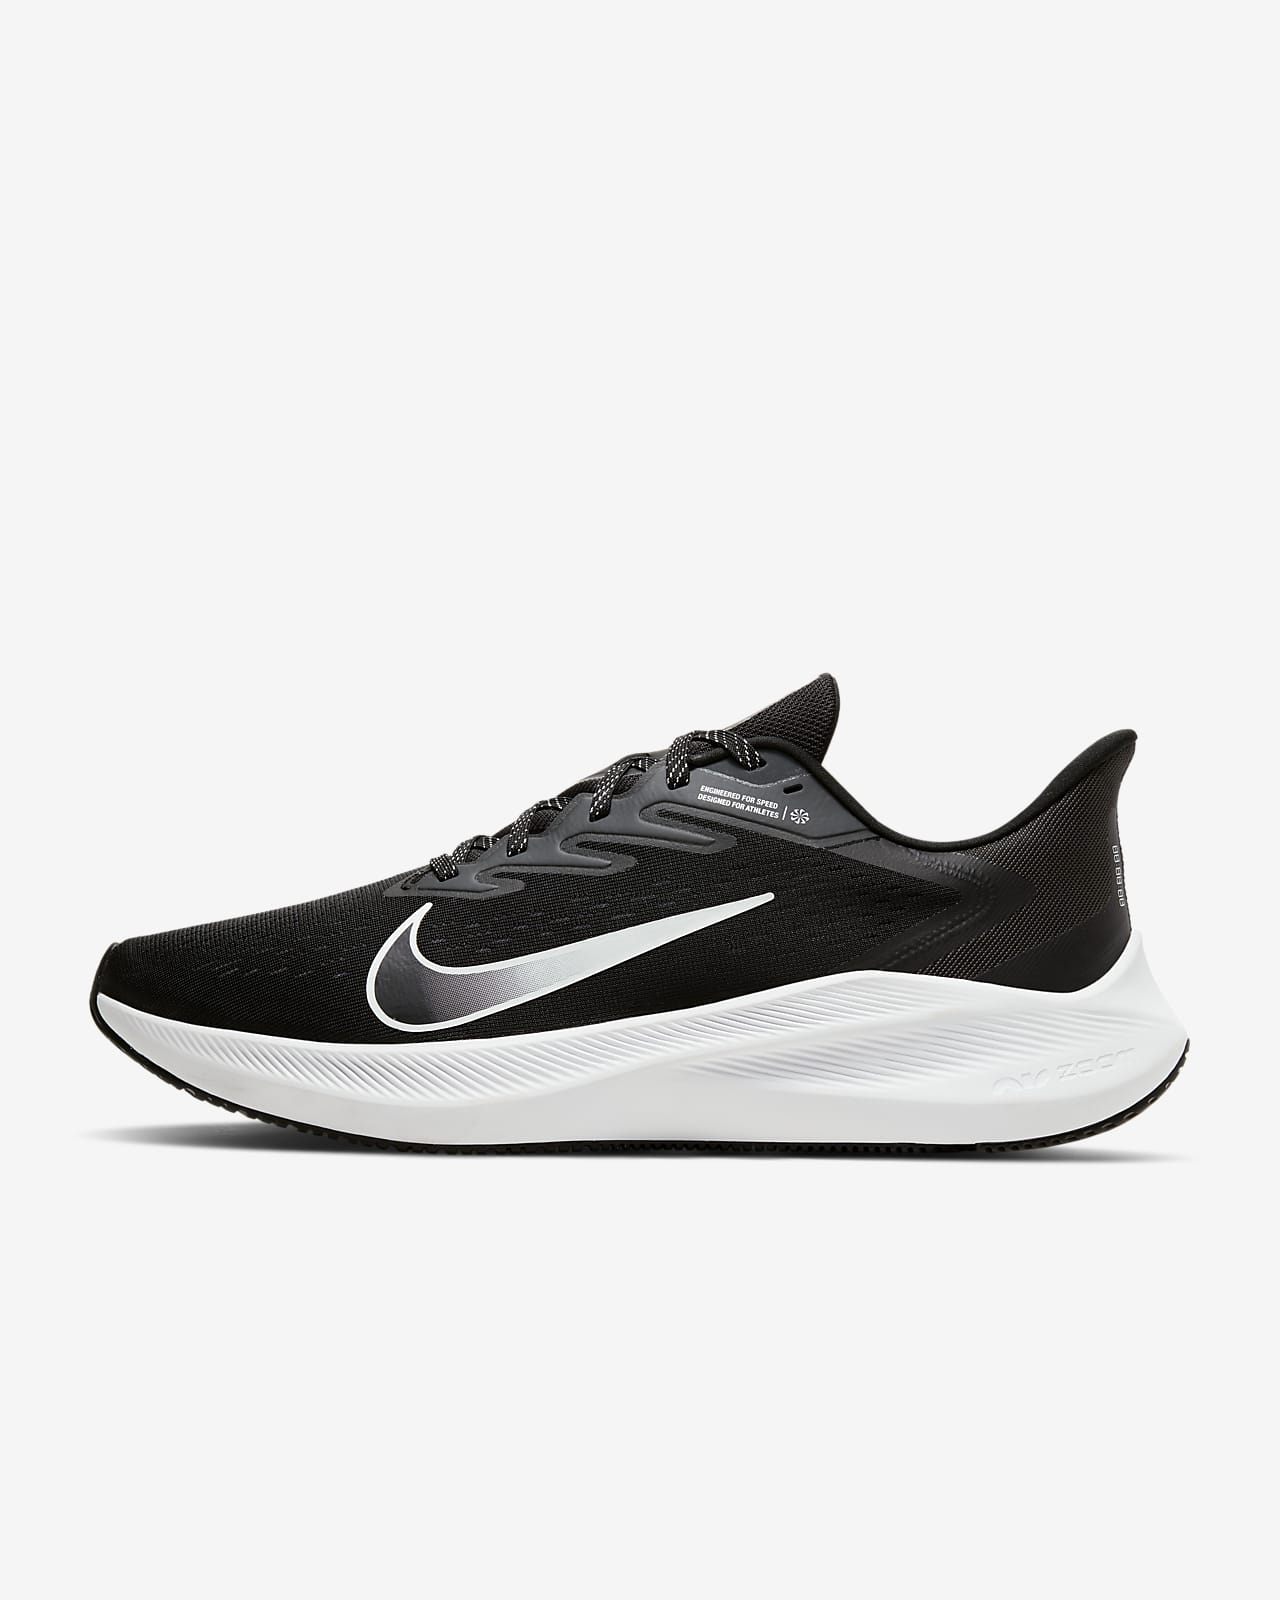 Nike Air Zoom Winflo 7 Men's Running Shoe. Nike LU